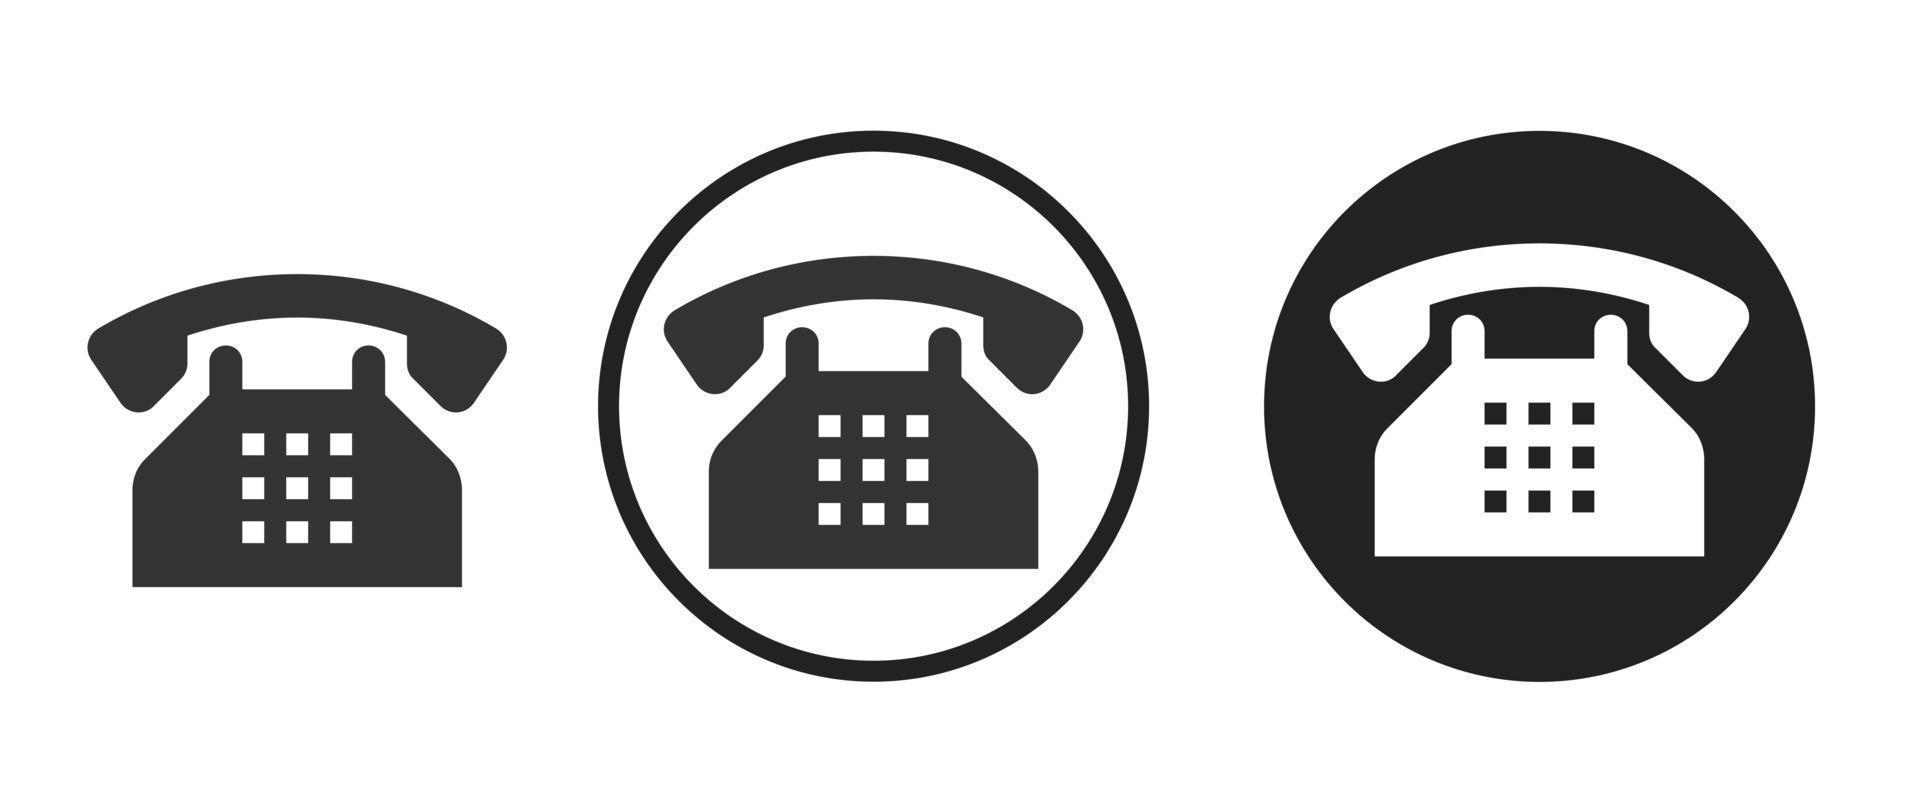 Phone icon . web icon set .vector illustration vector